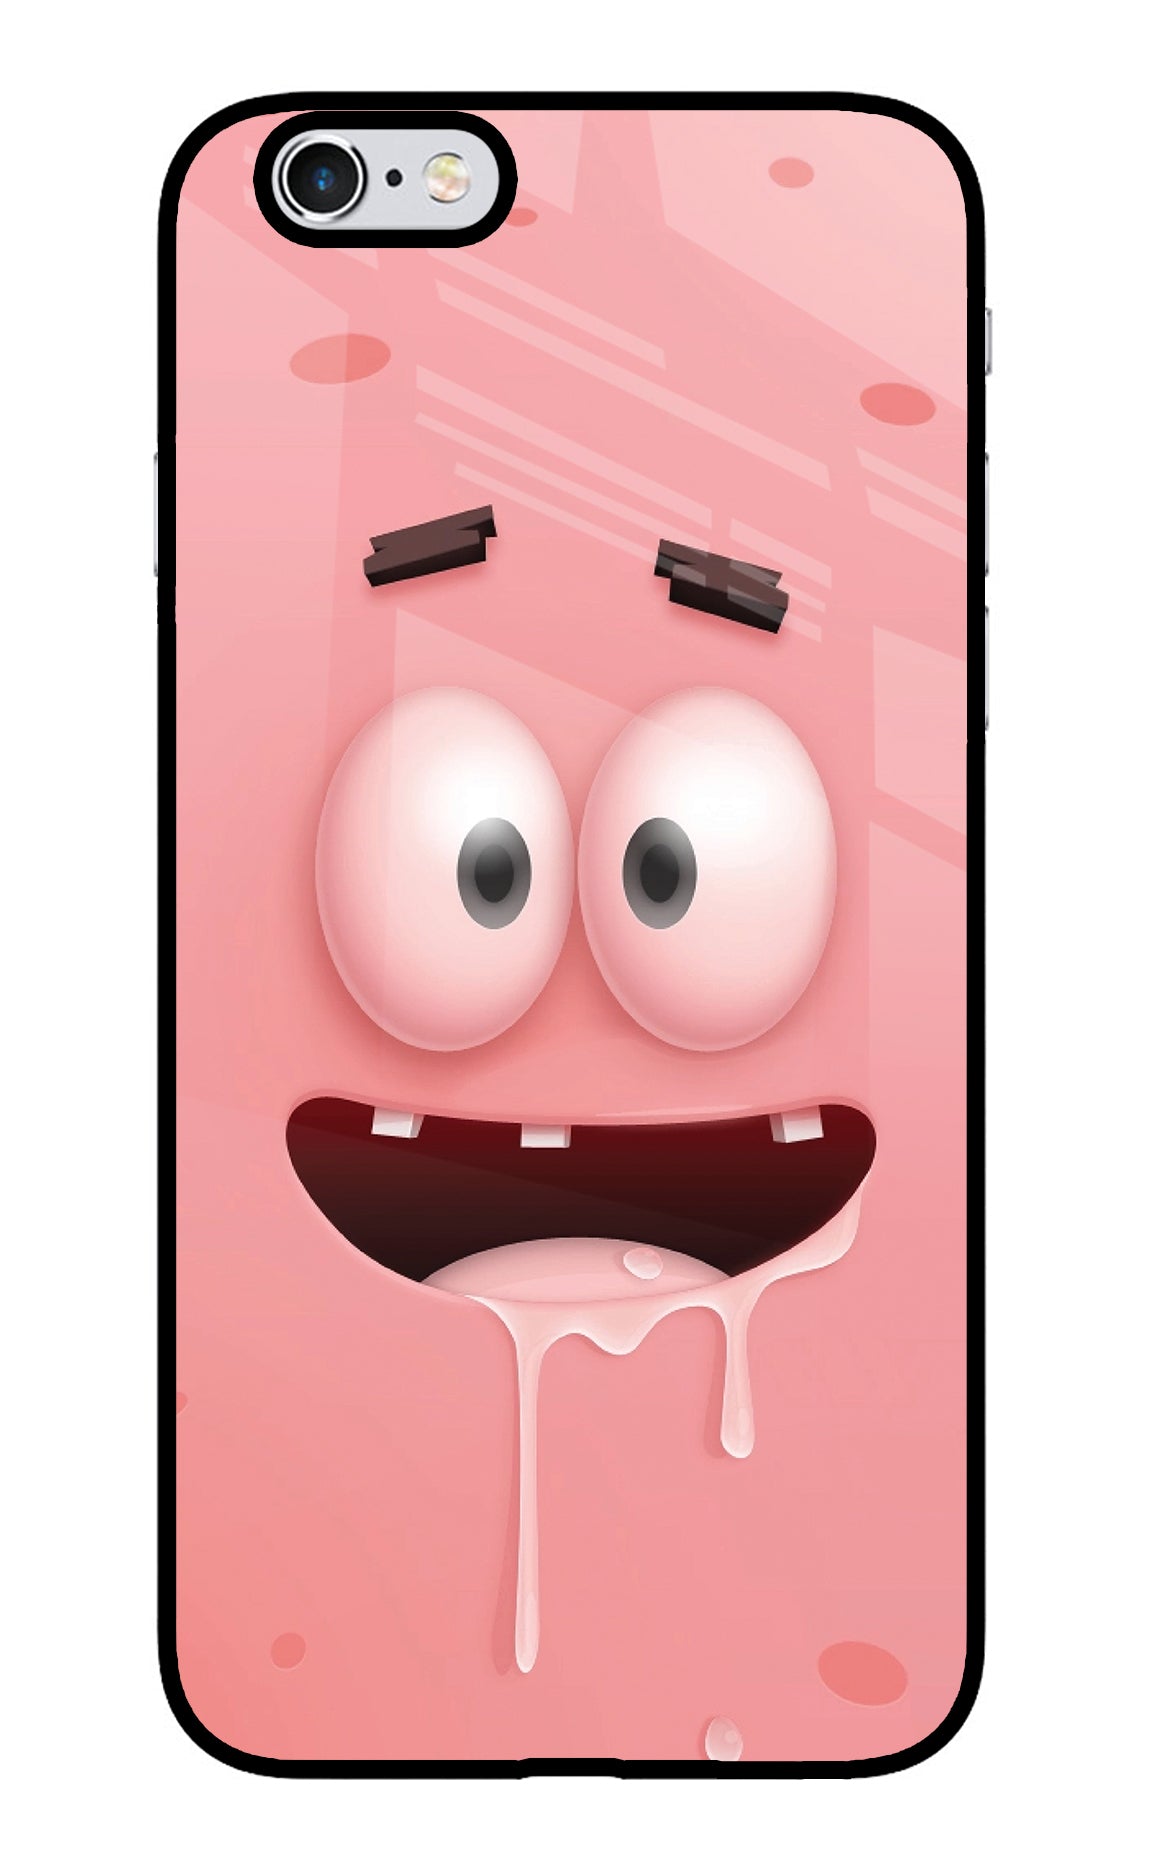 Sponge 2 iPhone 6/6s Back Cover